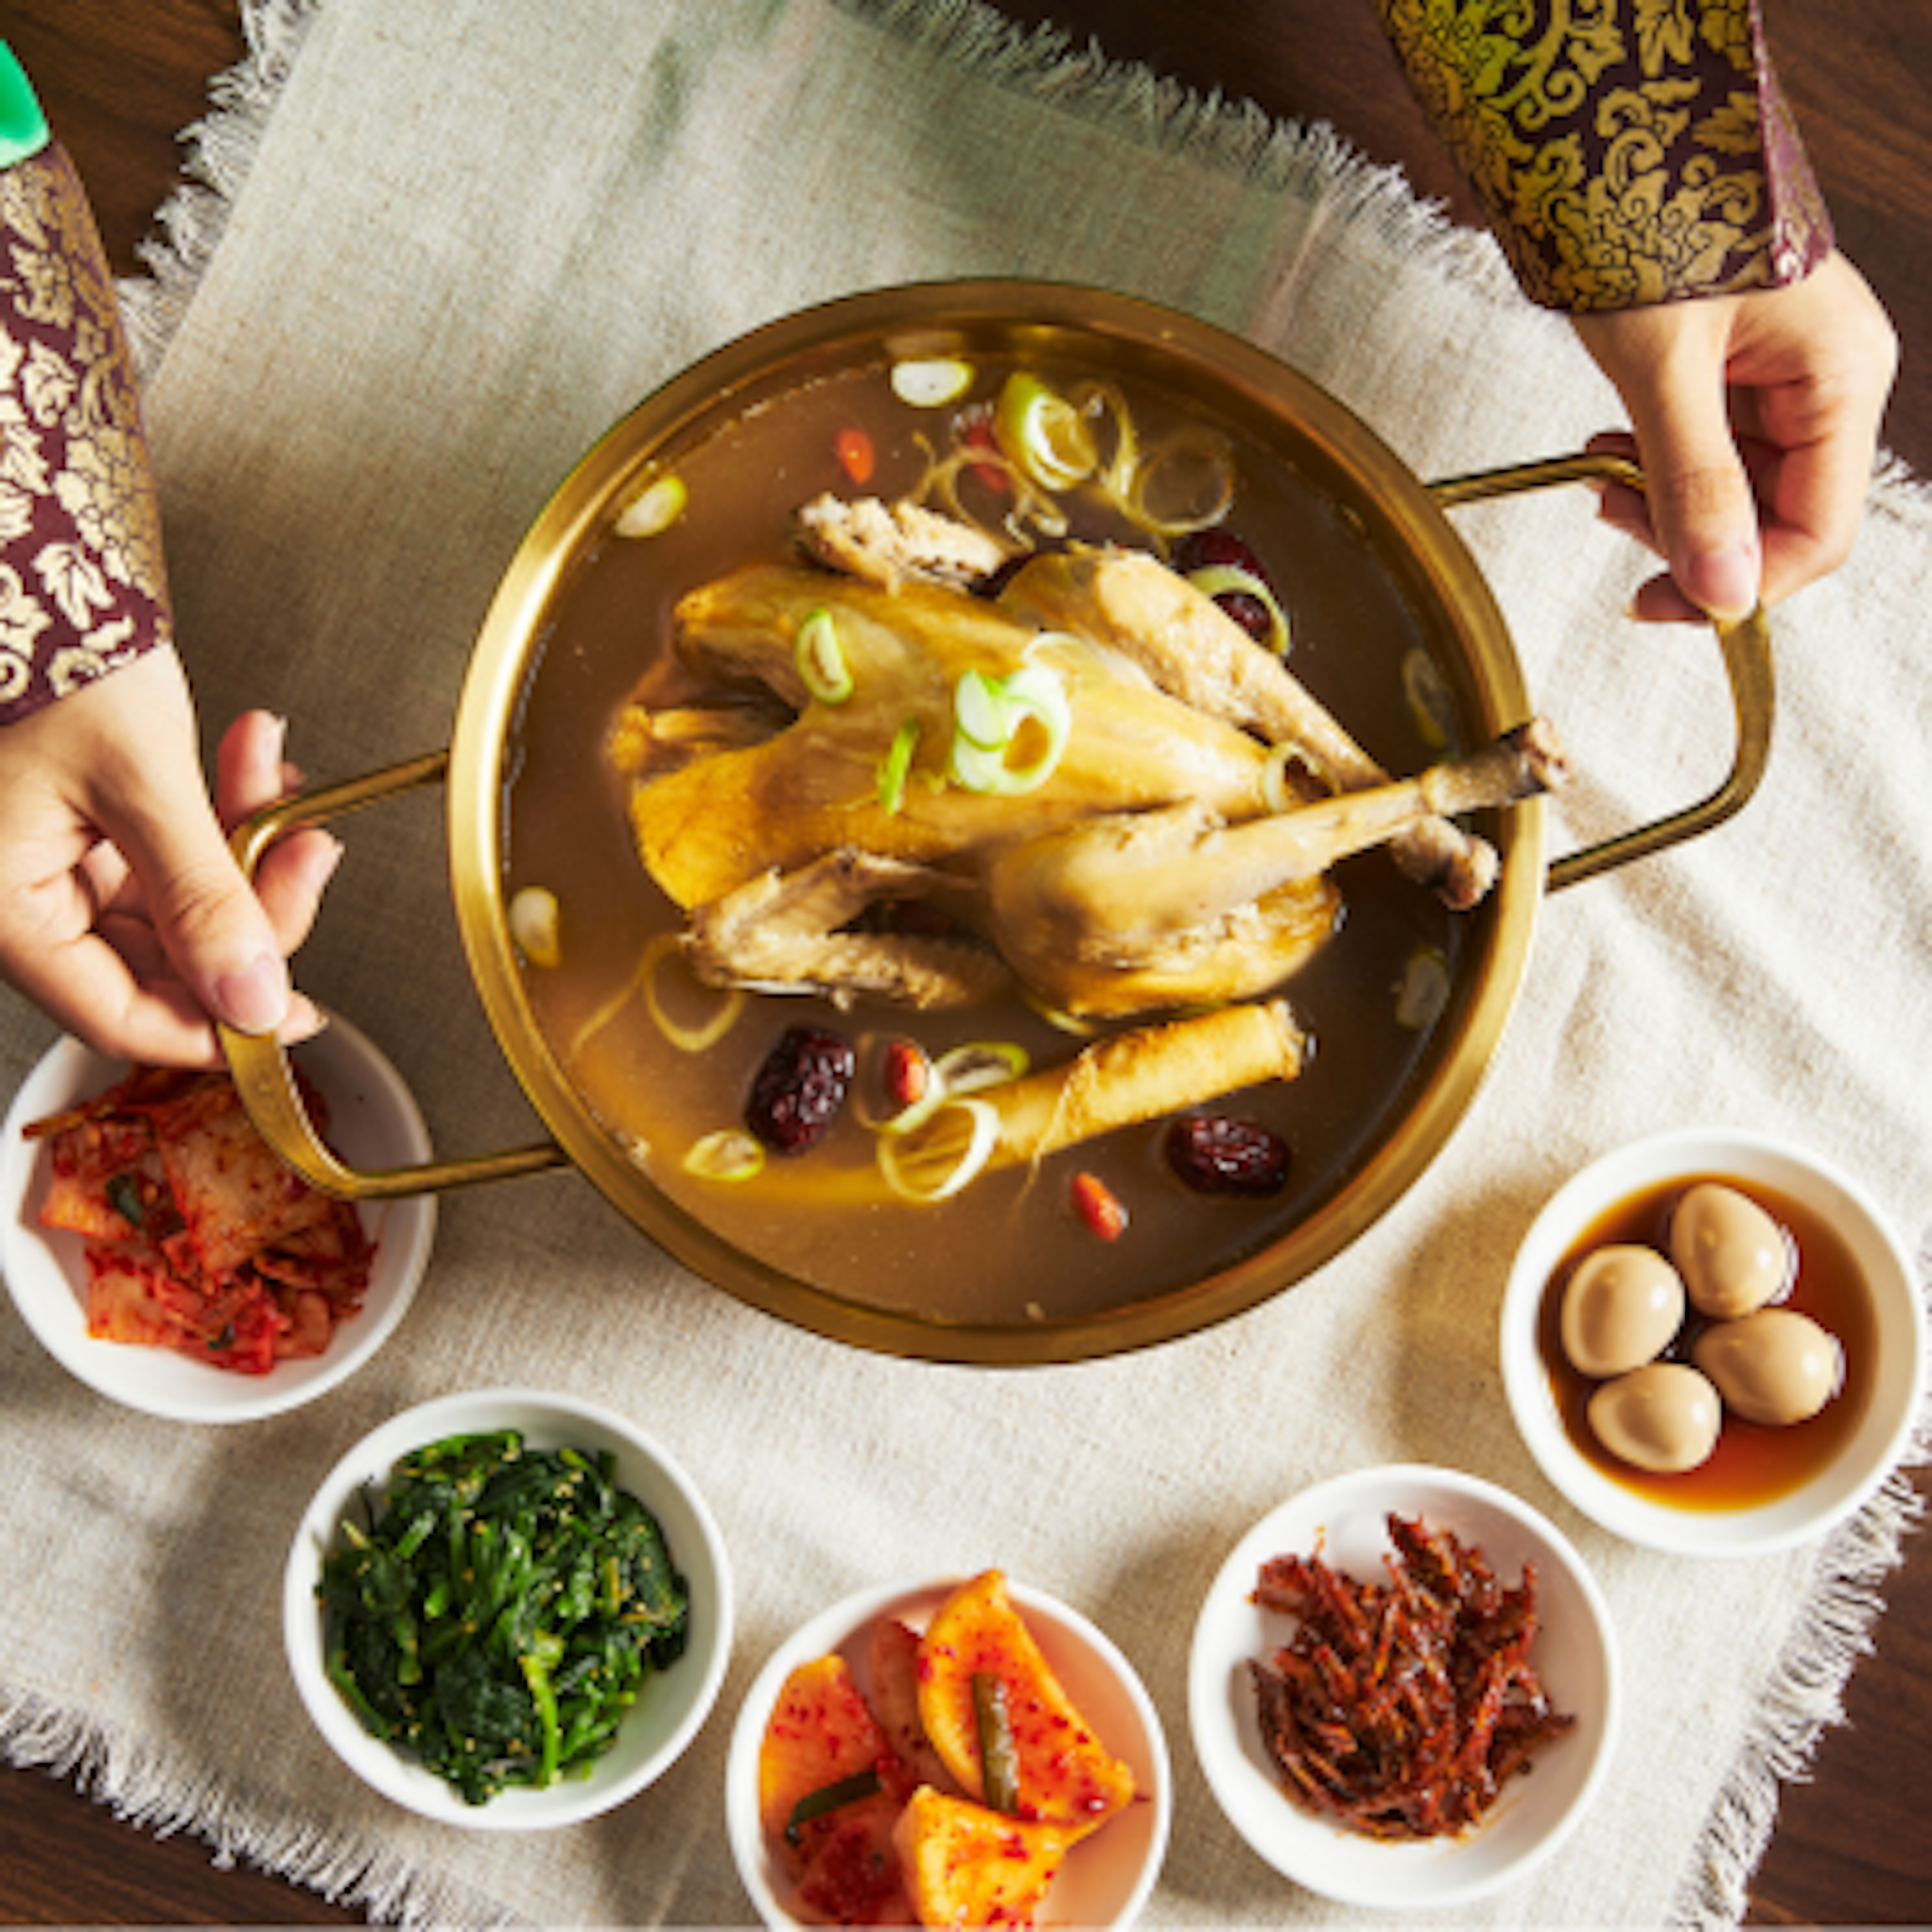 SUBIN Samgyetang Soup Base 70g - Traditional Korean Chicken Soup Made Easy